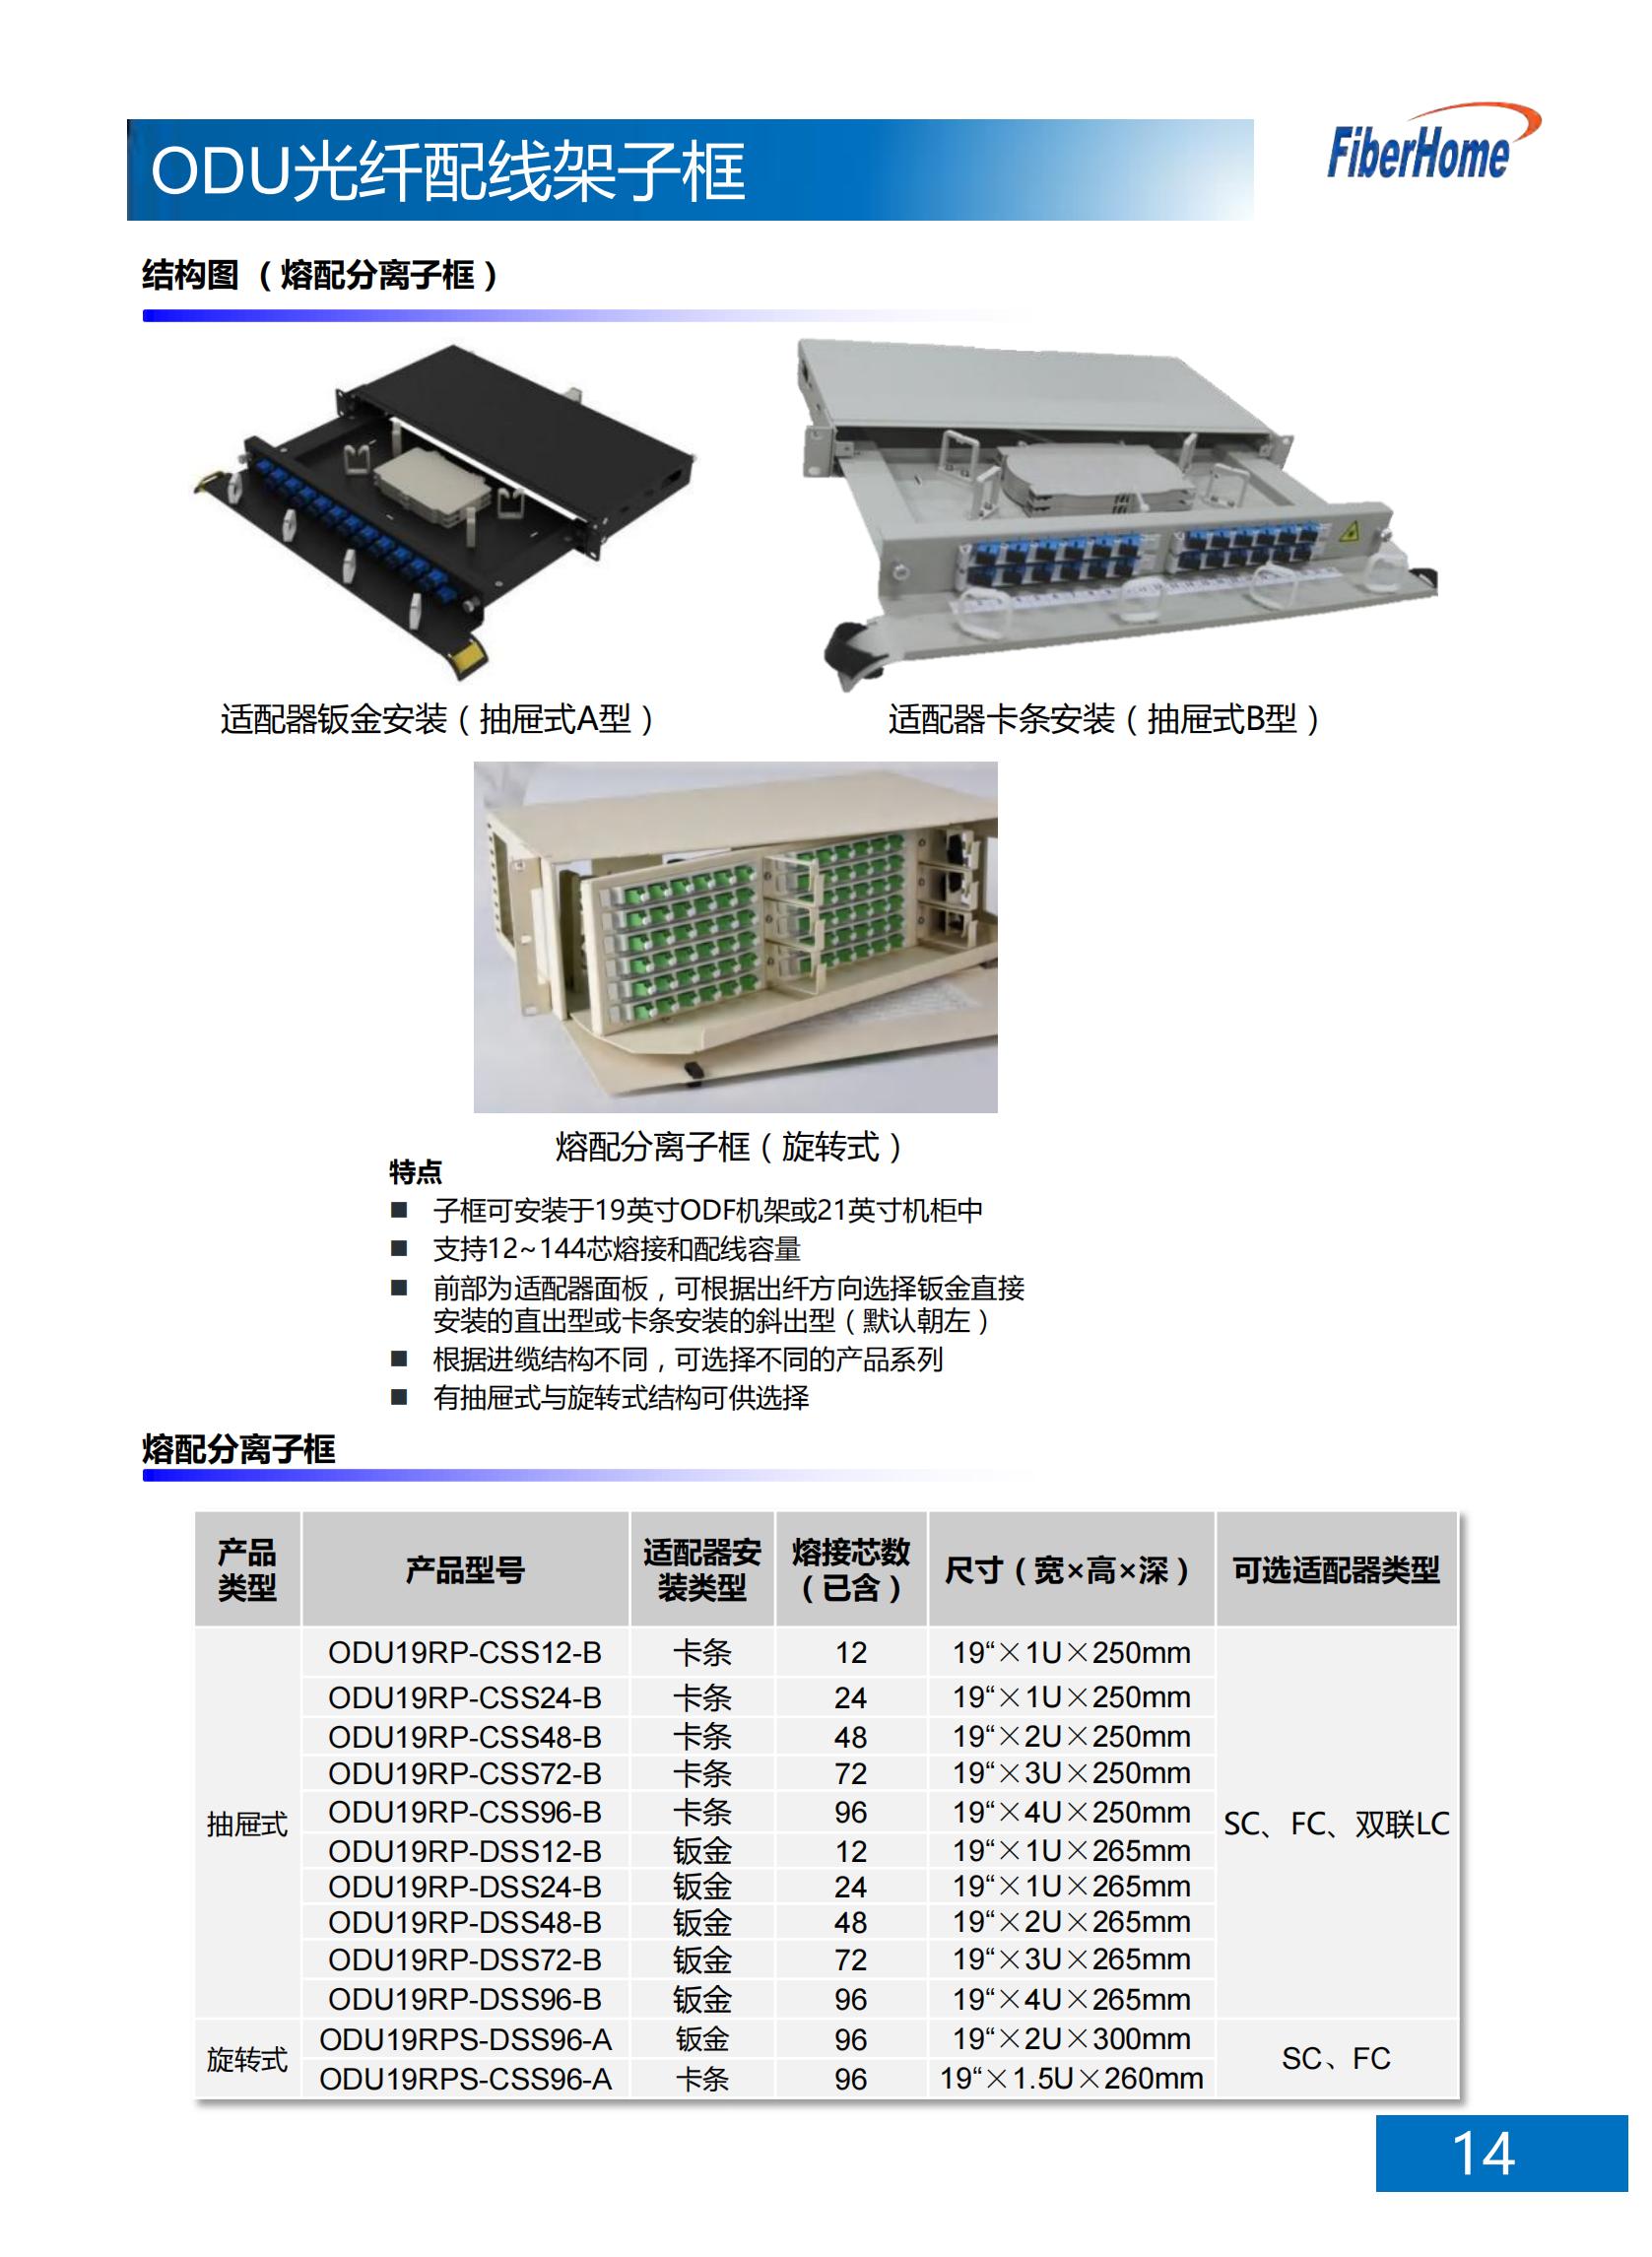 48-core ODU optical fiber distribution shelf frame ODU19T-A48-B-SC (including 12-core SC fusion integration unit*4)